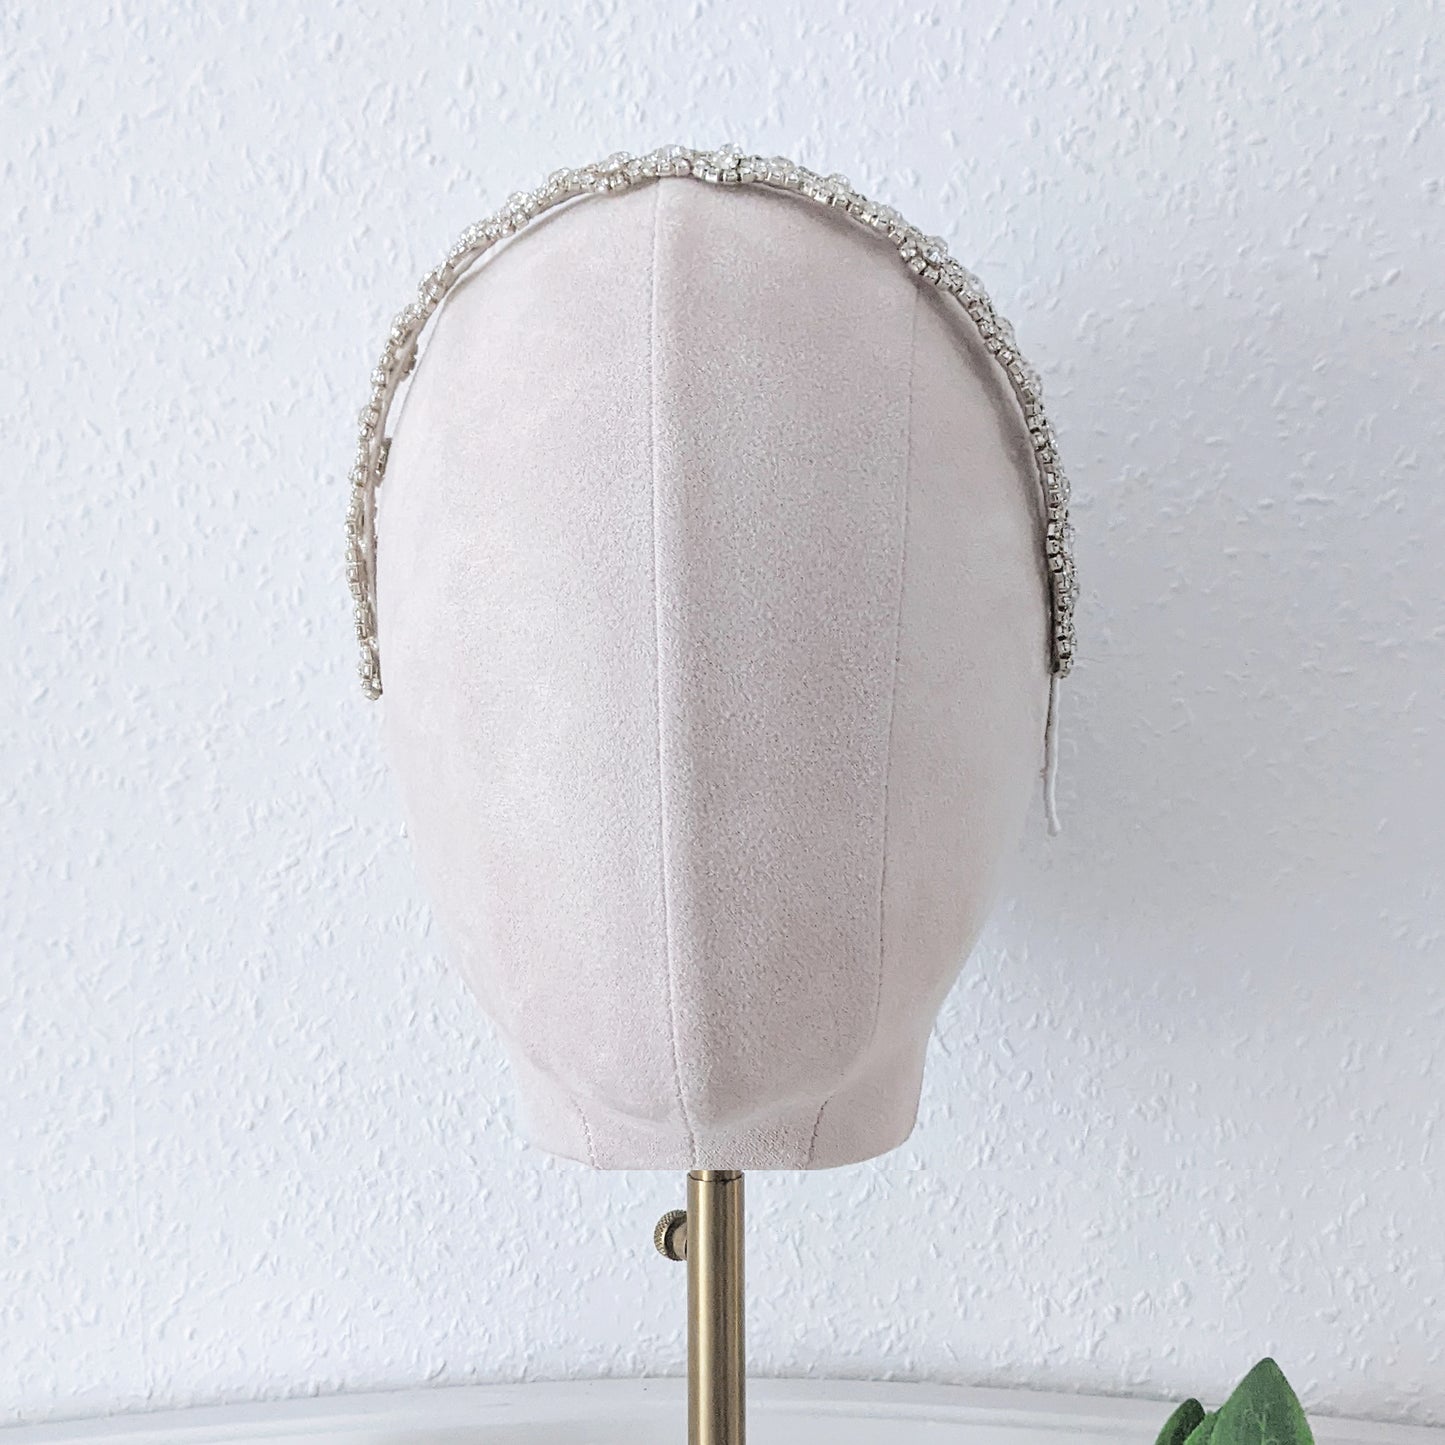 Exquisite Crystal Bridal Headband